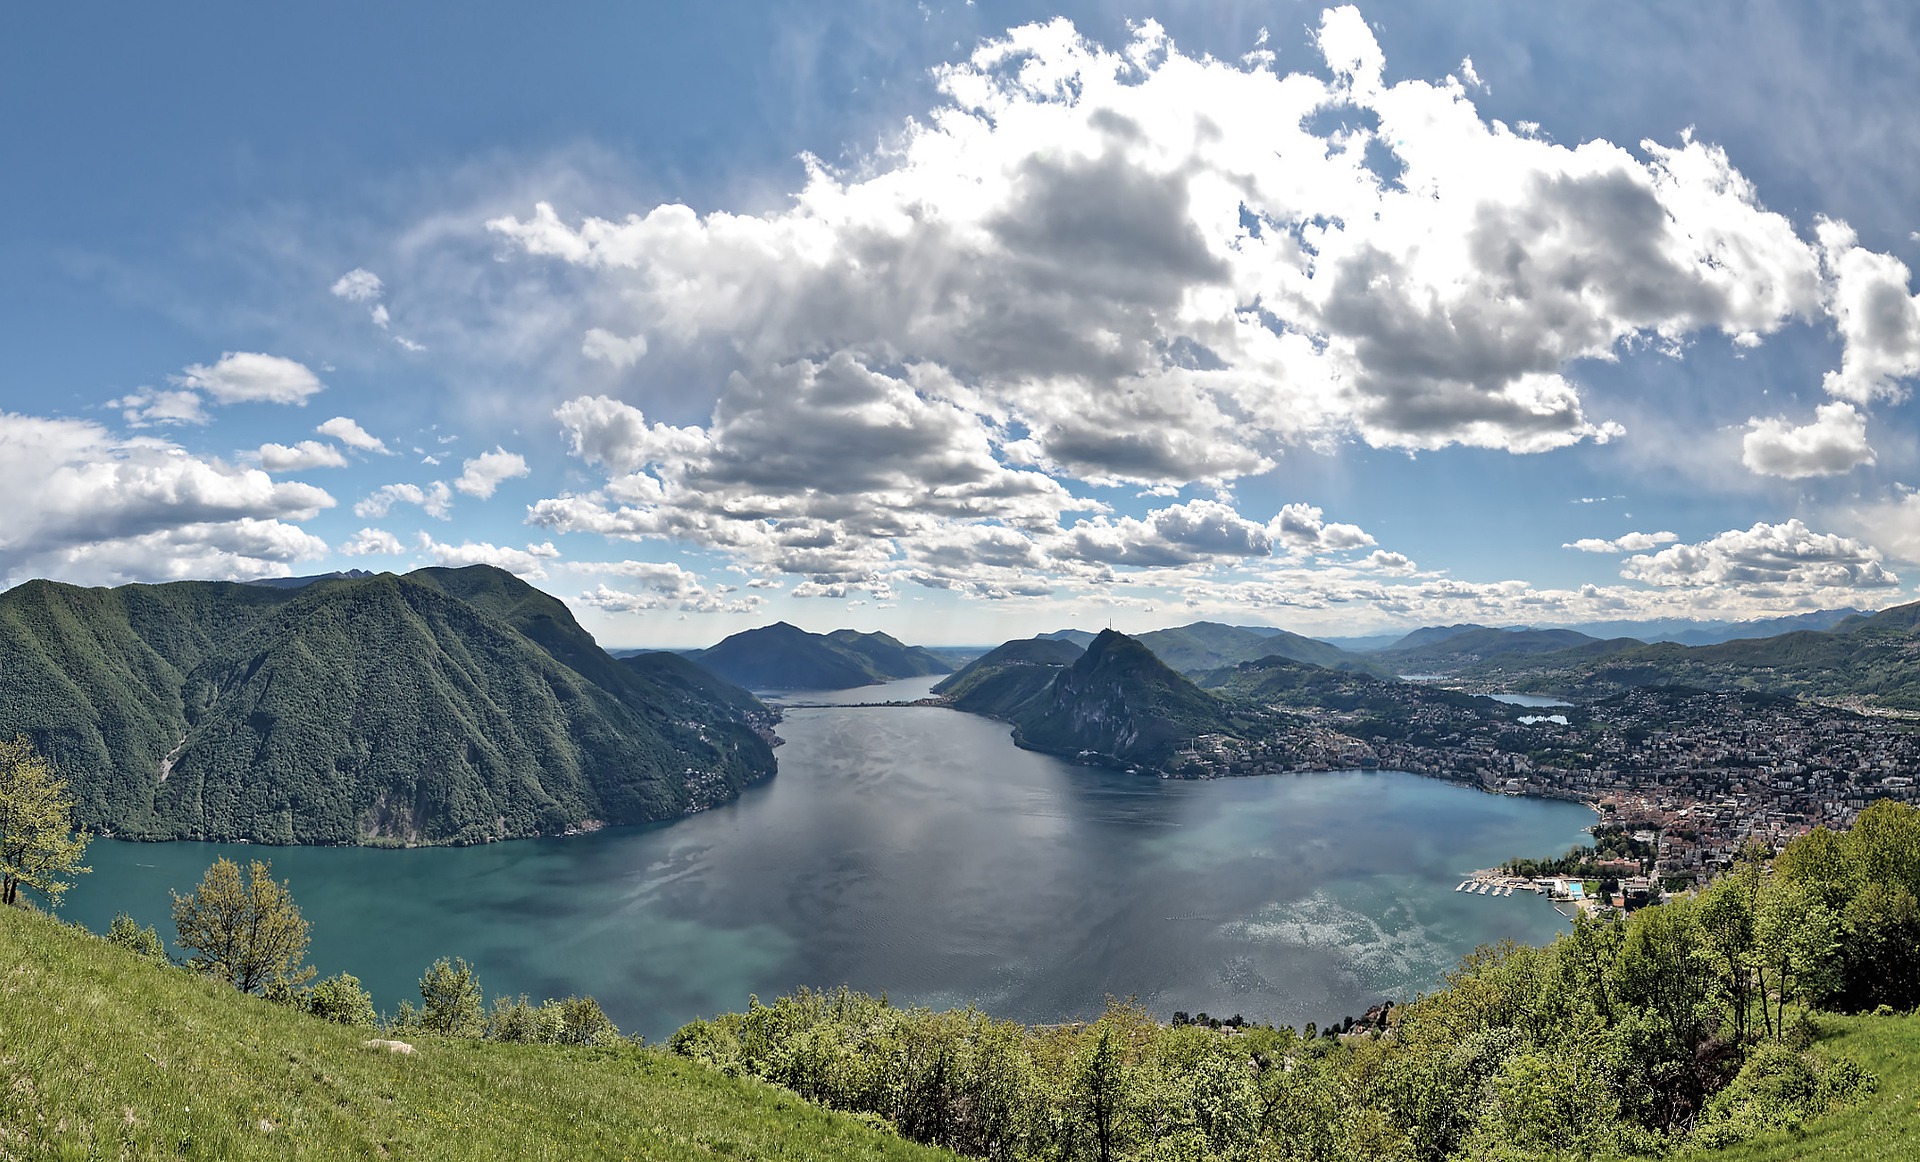 Vista of lake Lugano, Lugano city and surrounding mountains